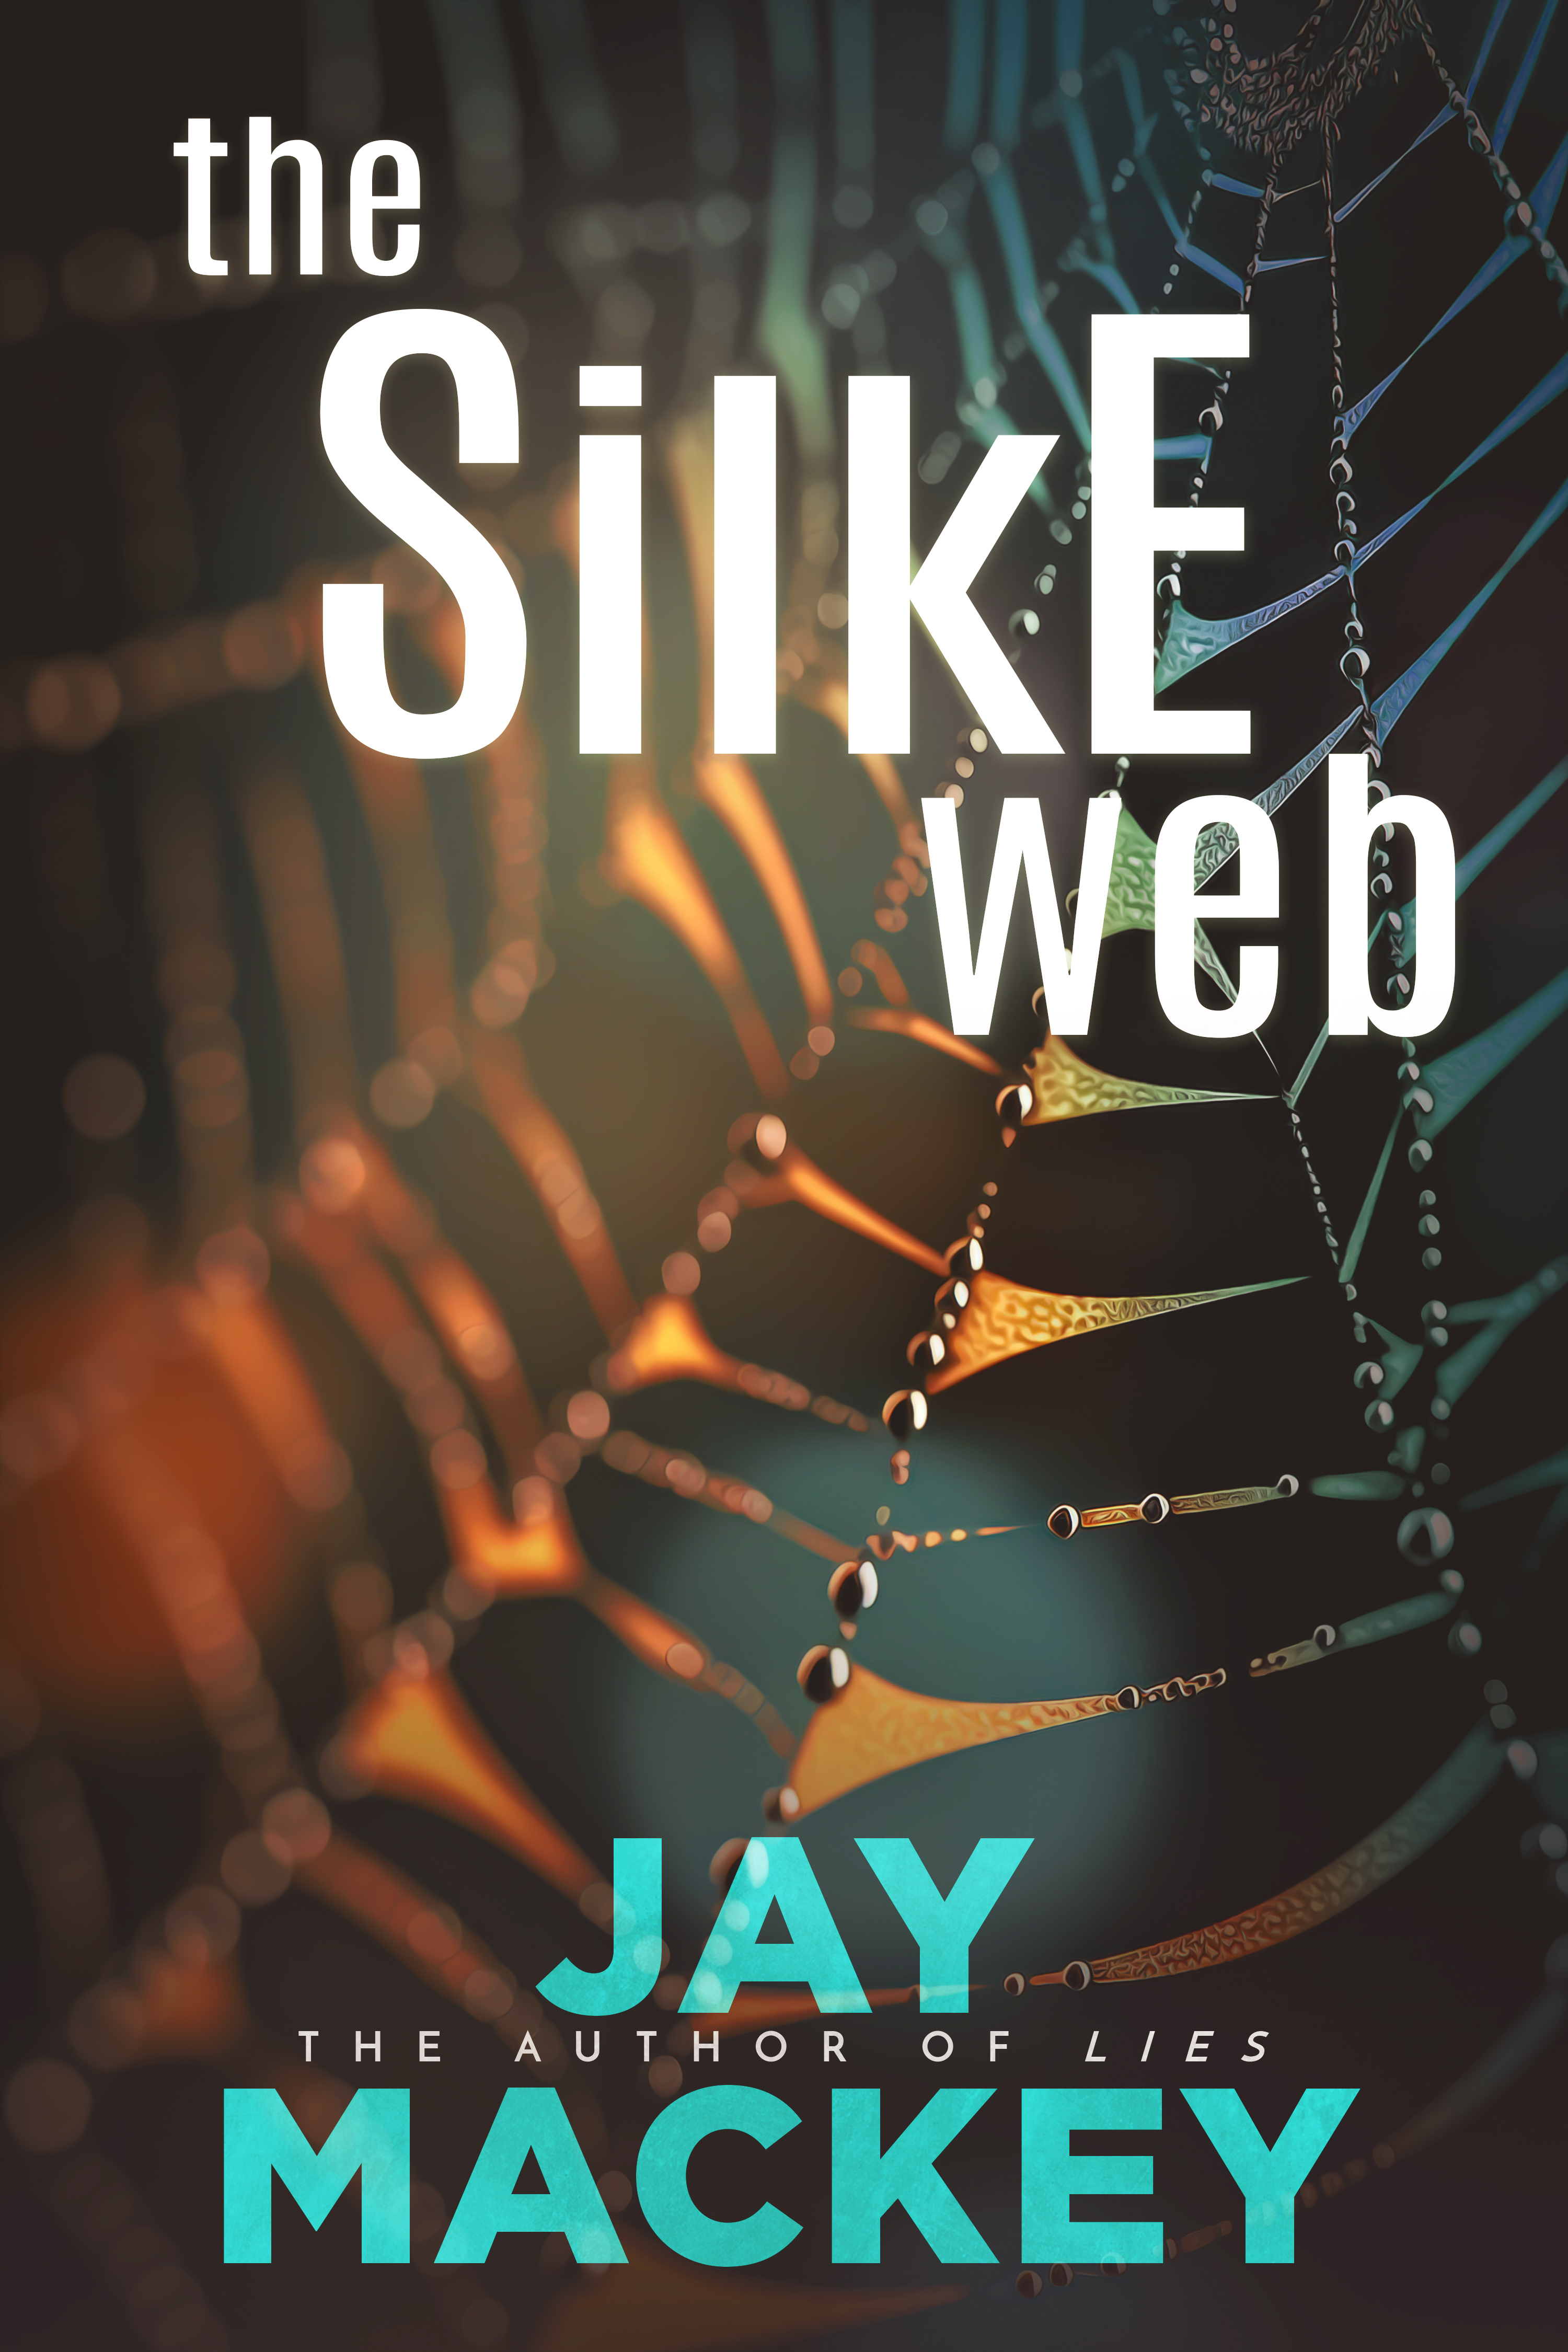 The SilkE Web